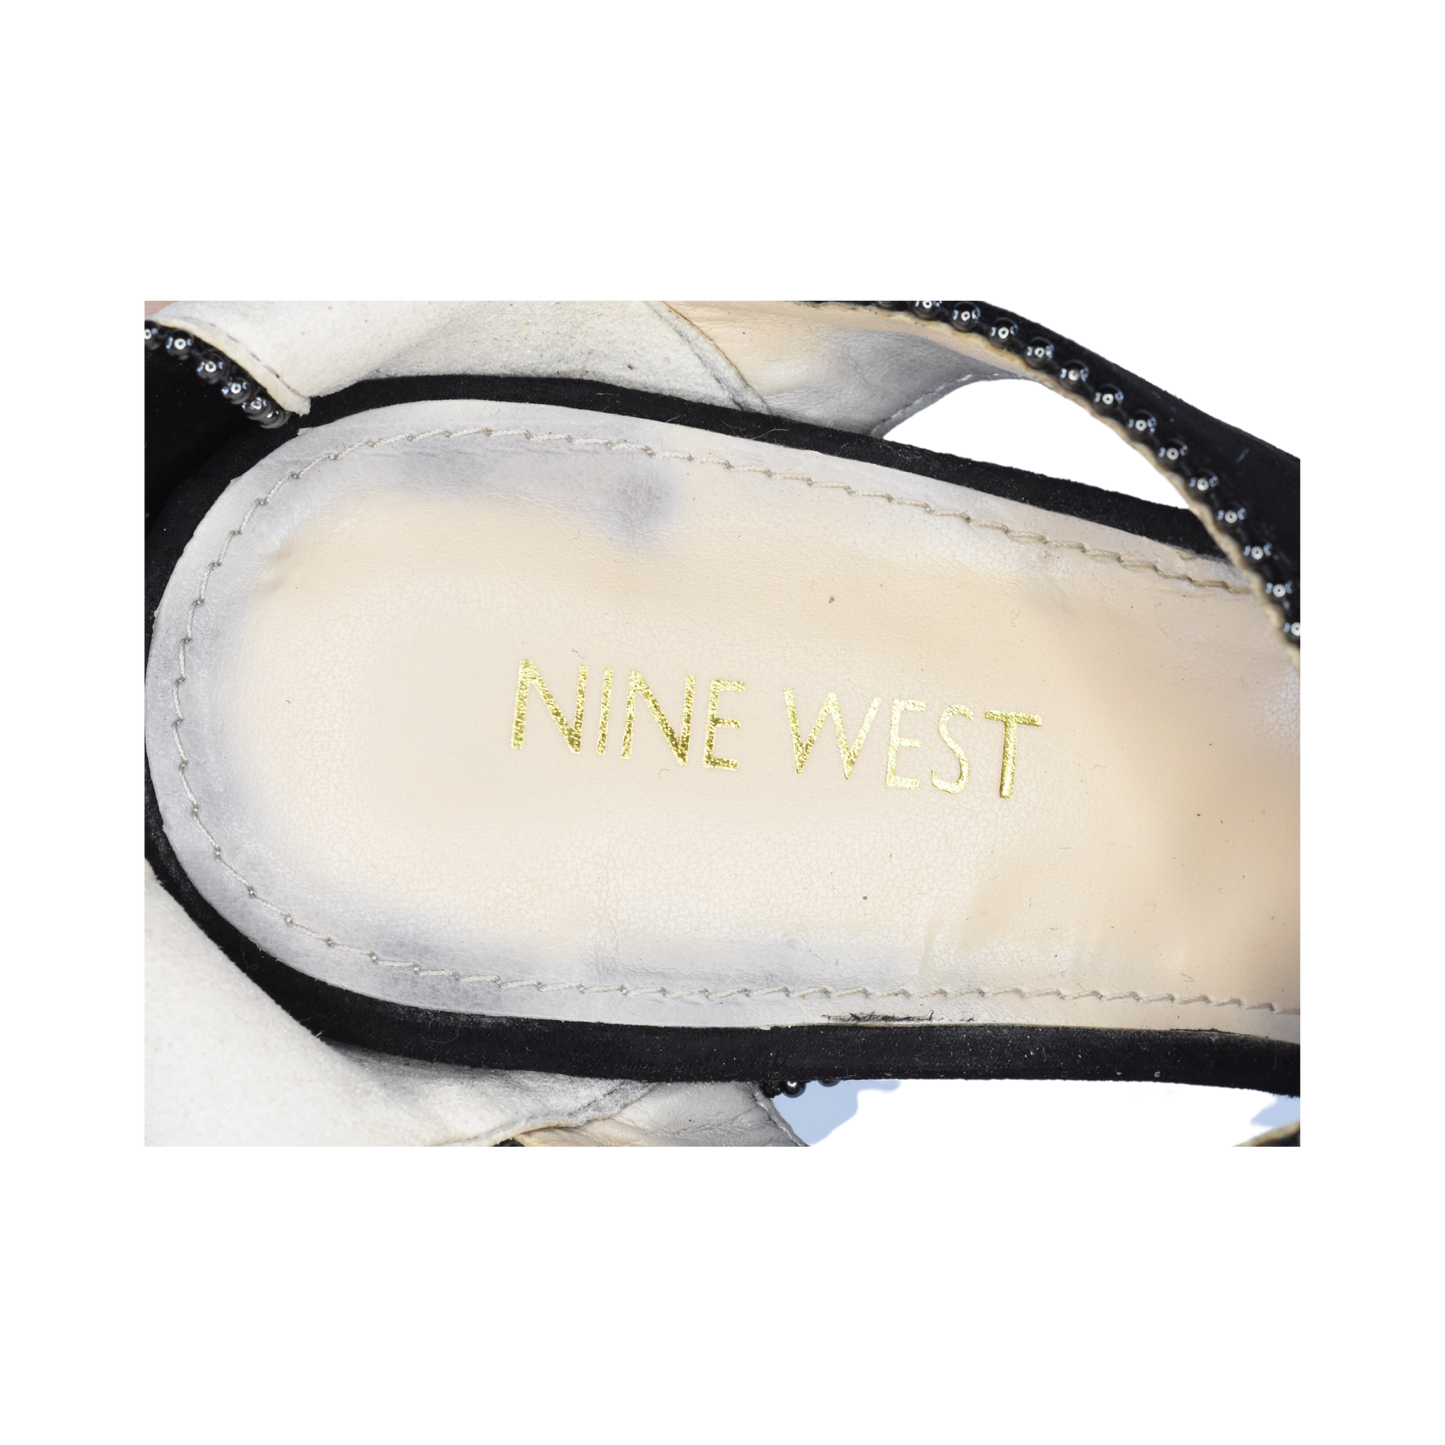 Nine West High Heel Black w Silver Bead Detail Size 8.5 SKU 000131-5